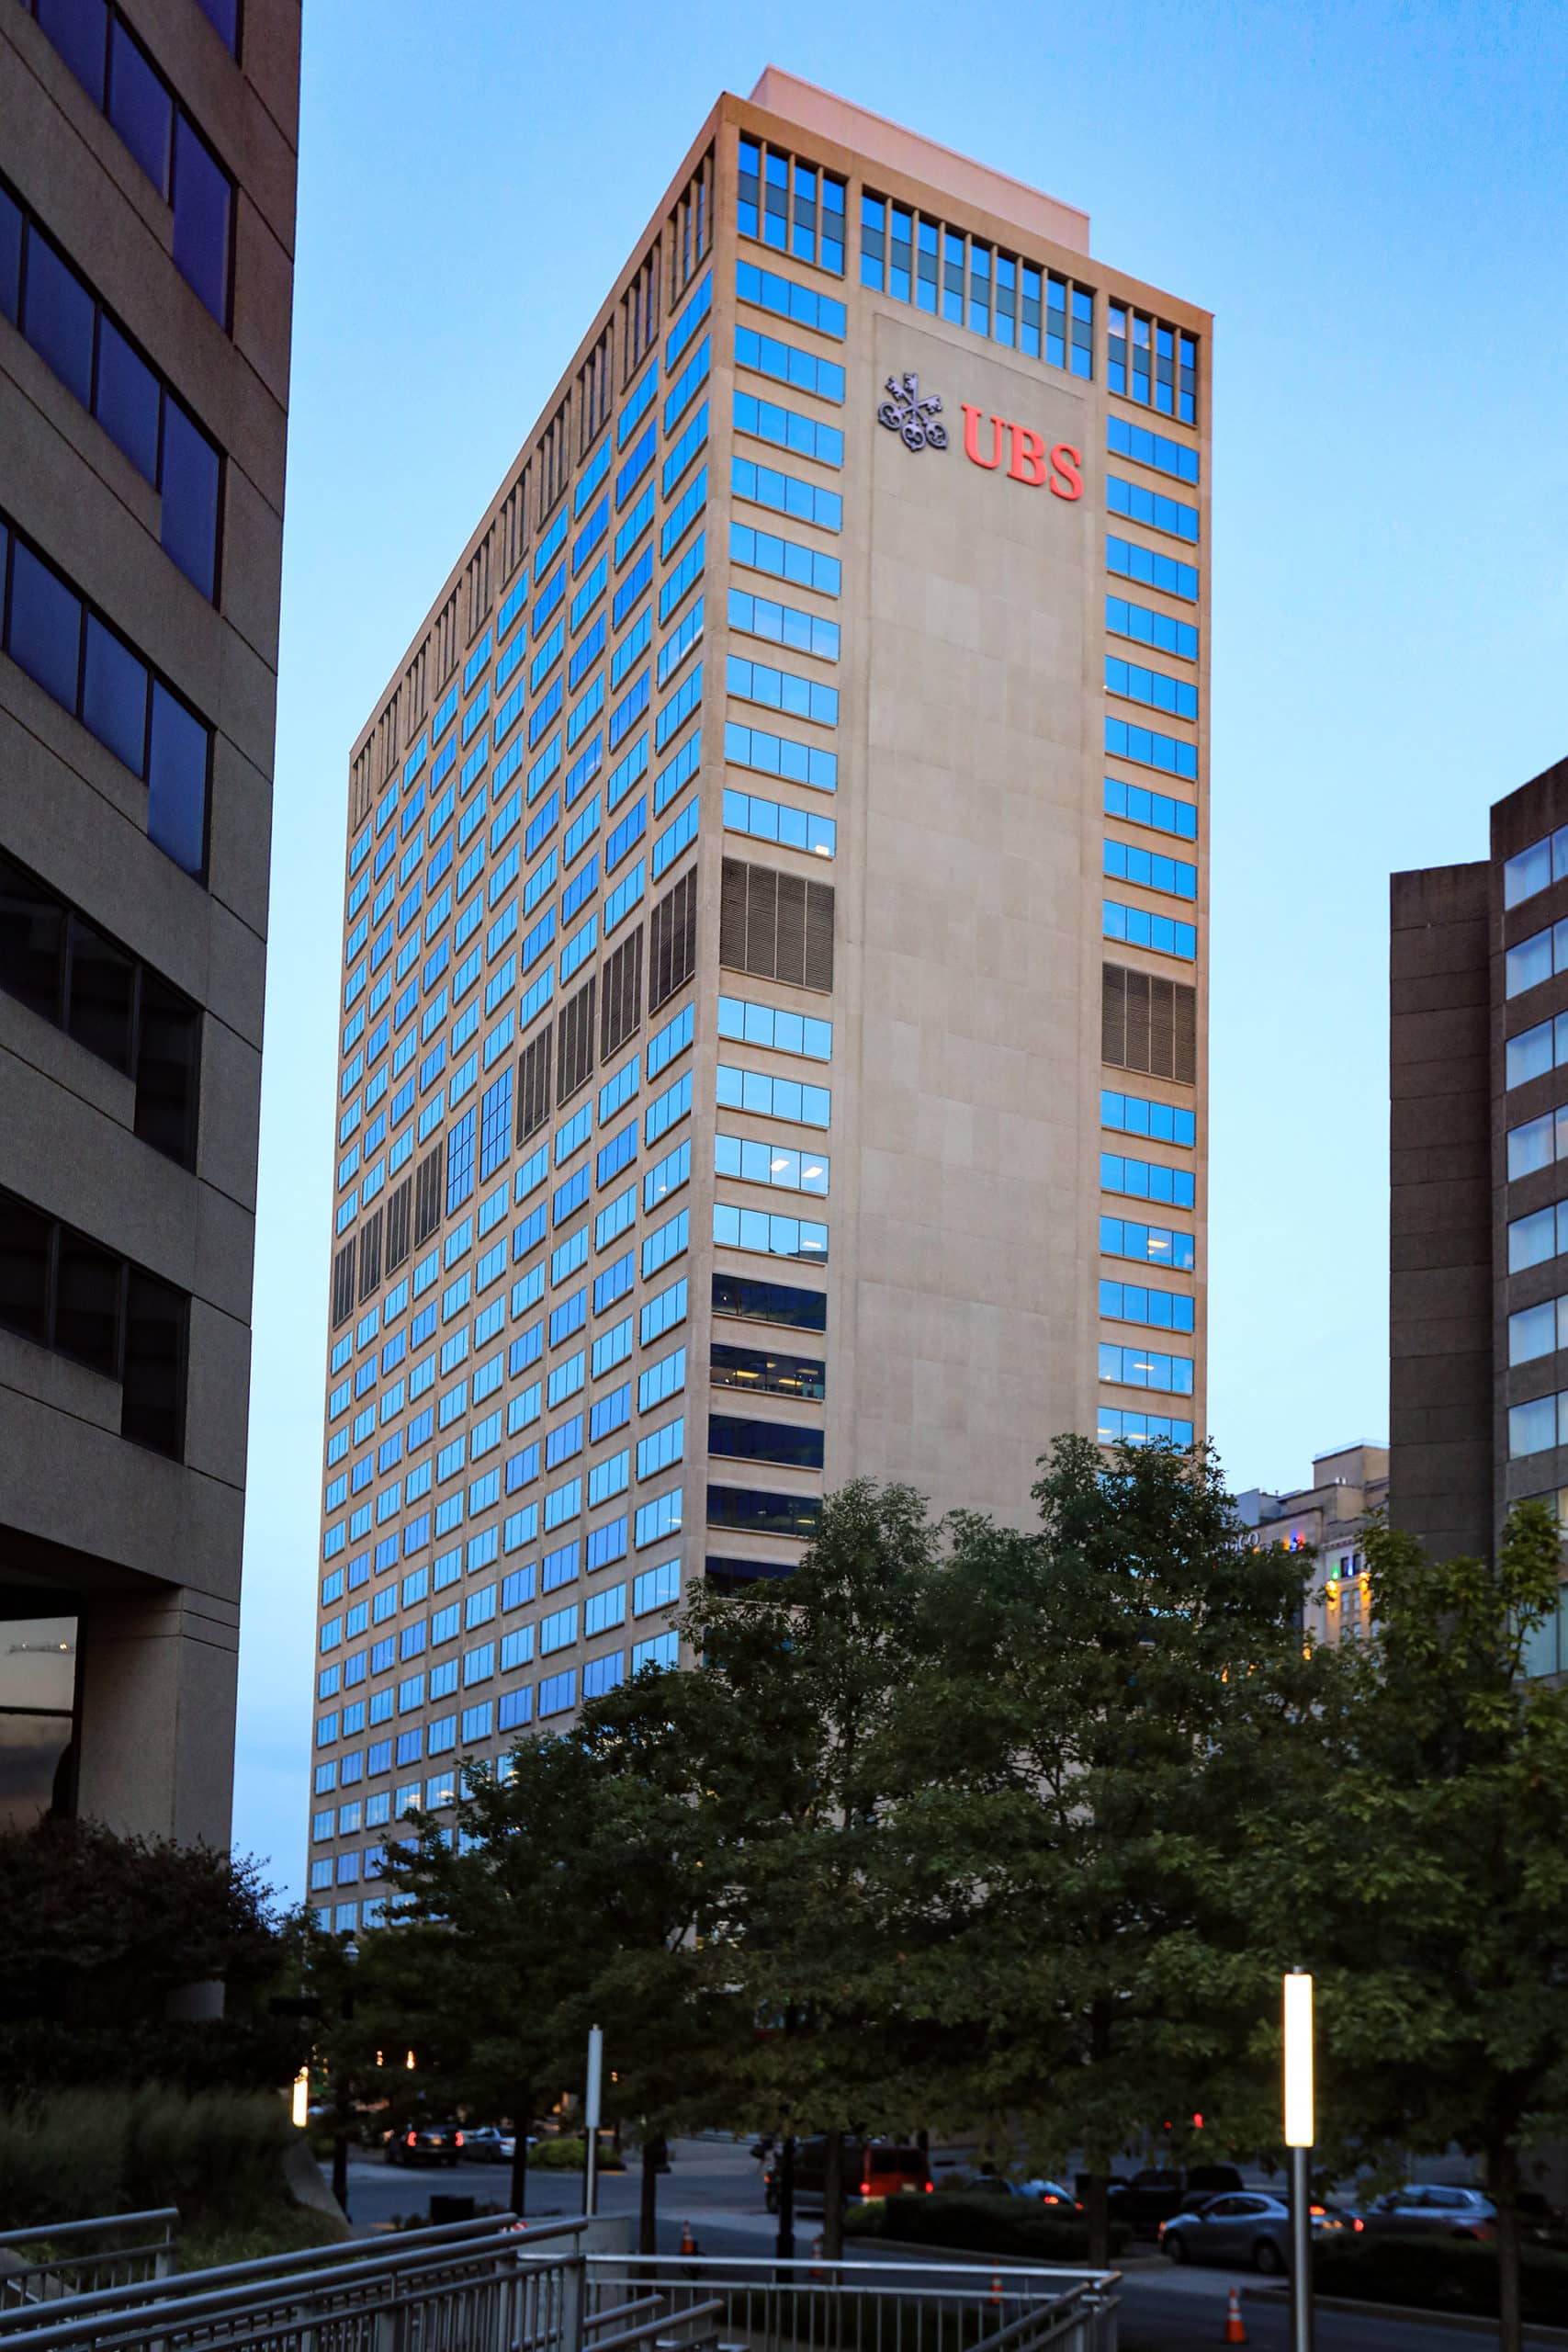 UBS Building